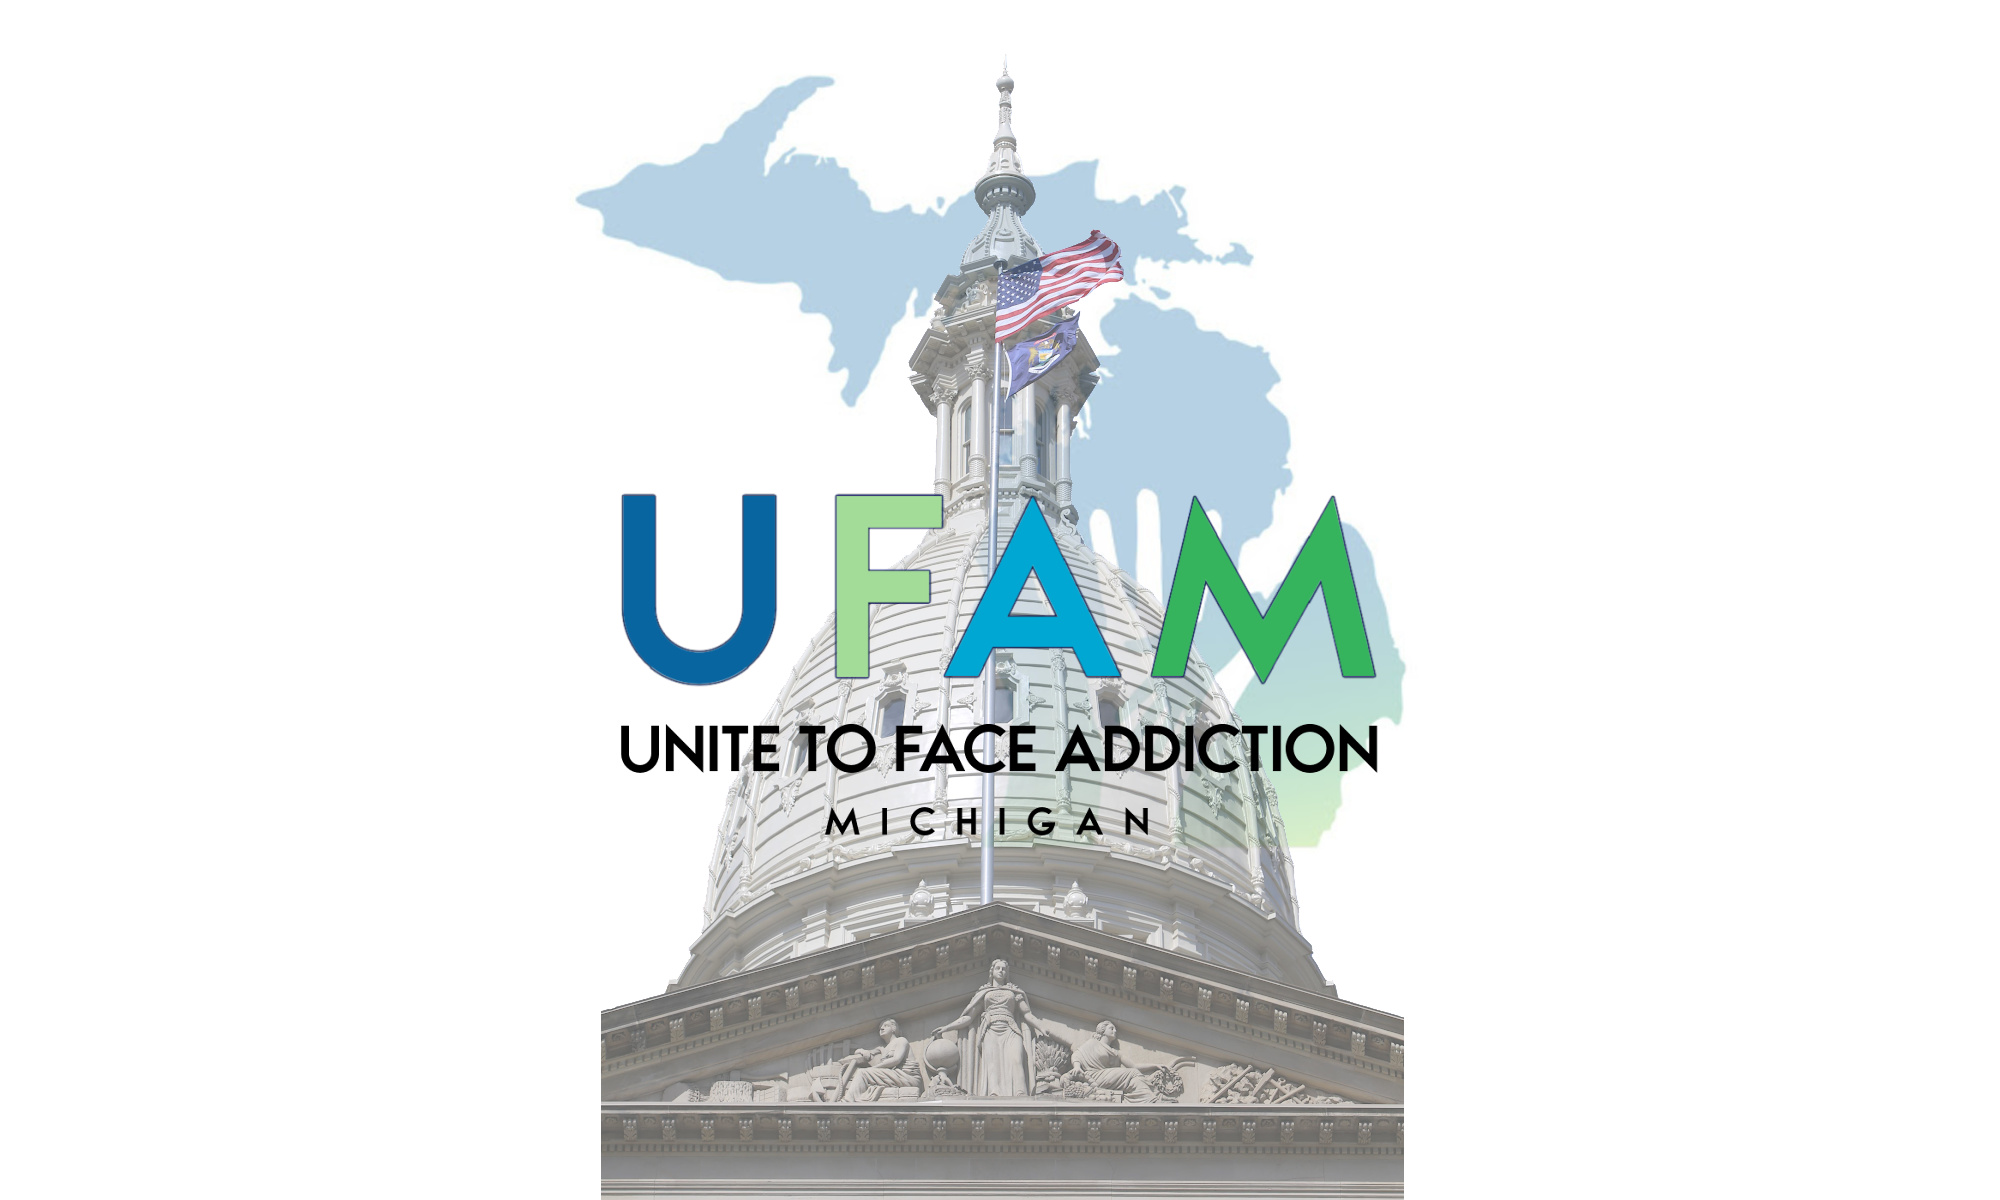 UFAM - Unite to Face Addiction - Michigan